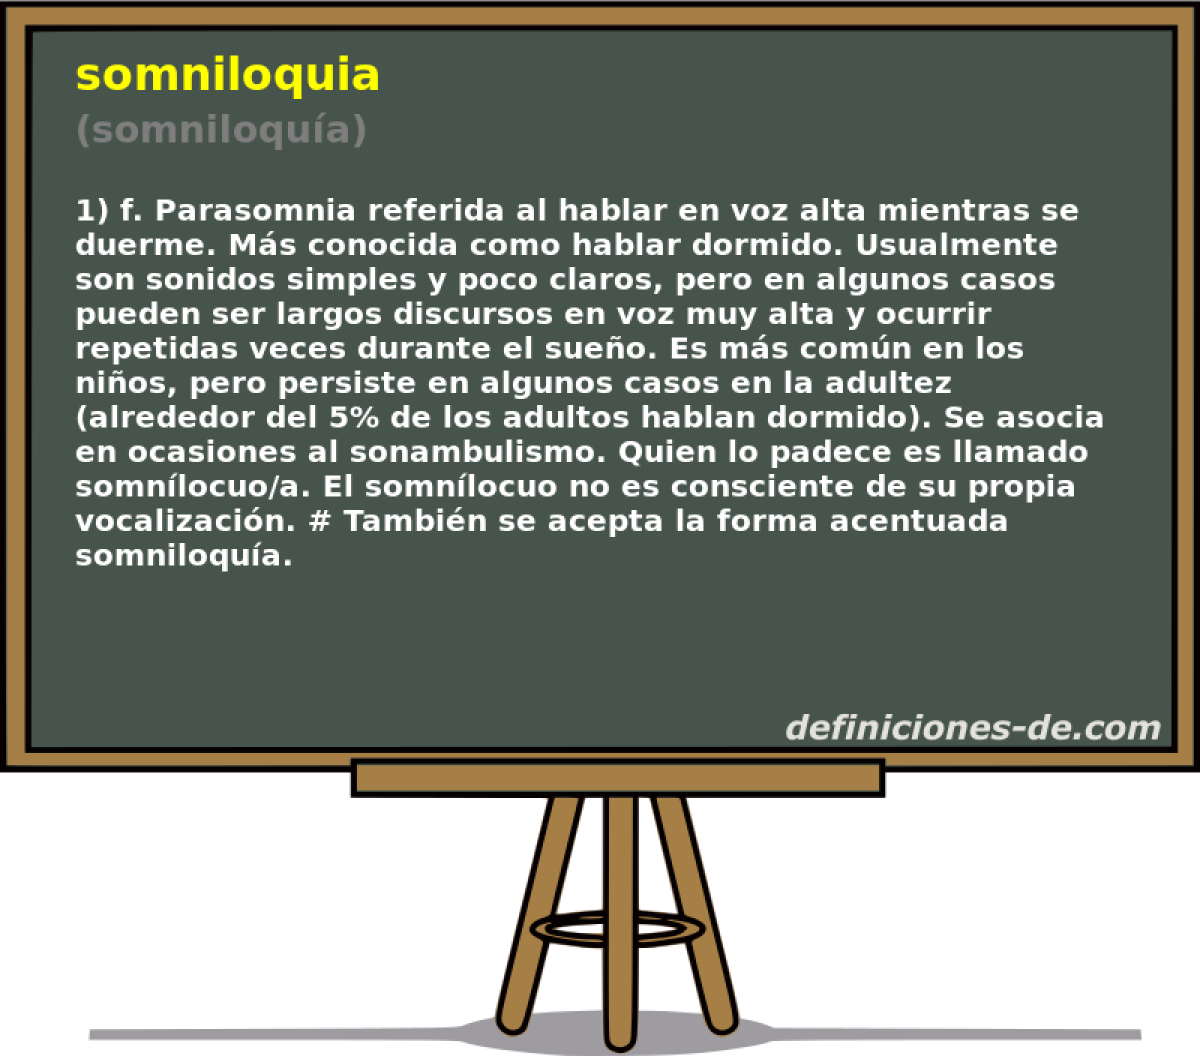 somniloquia (somniloqua)